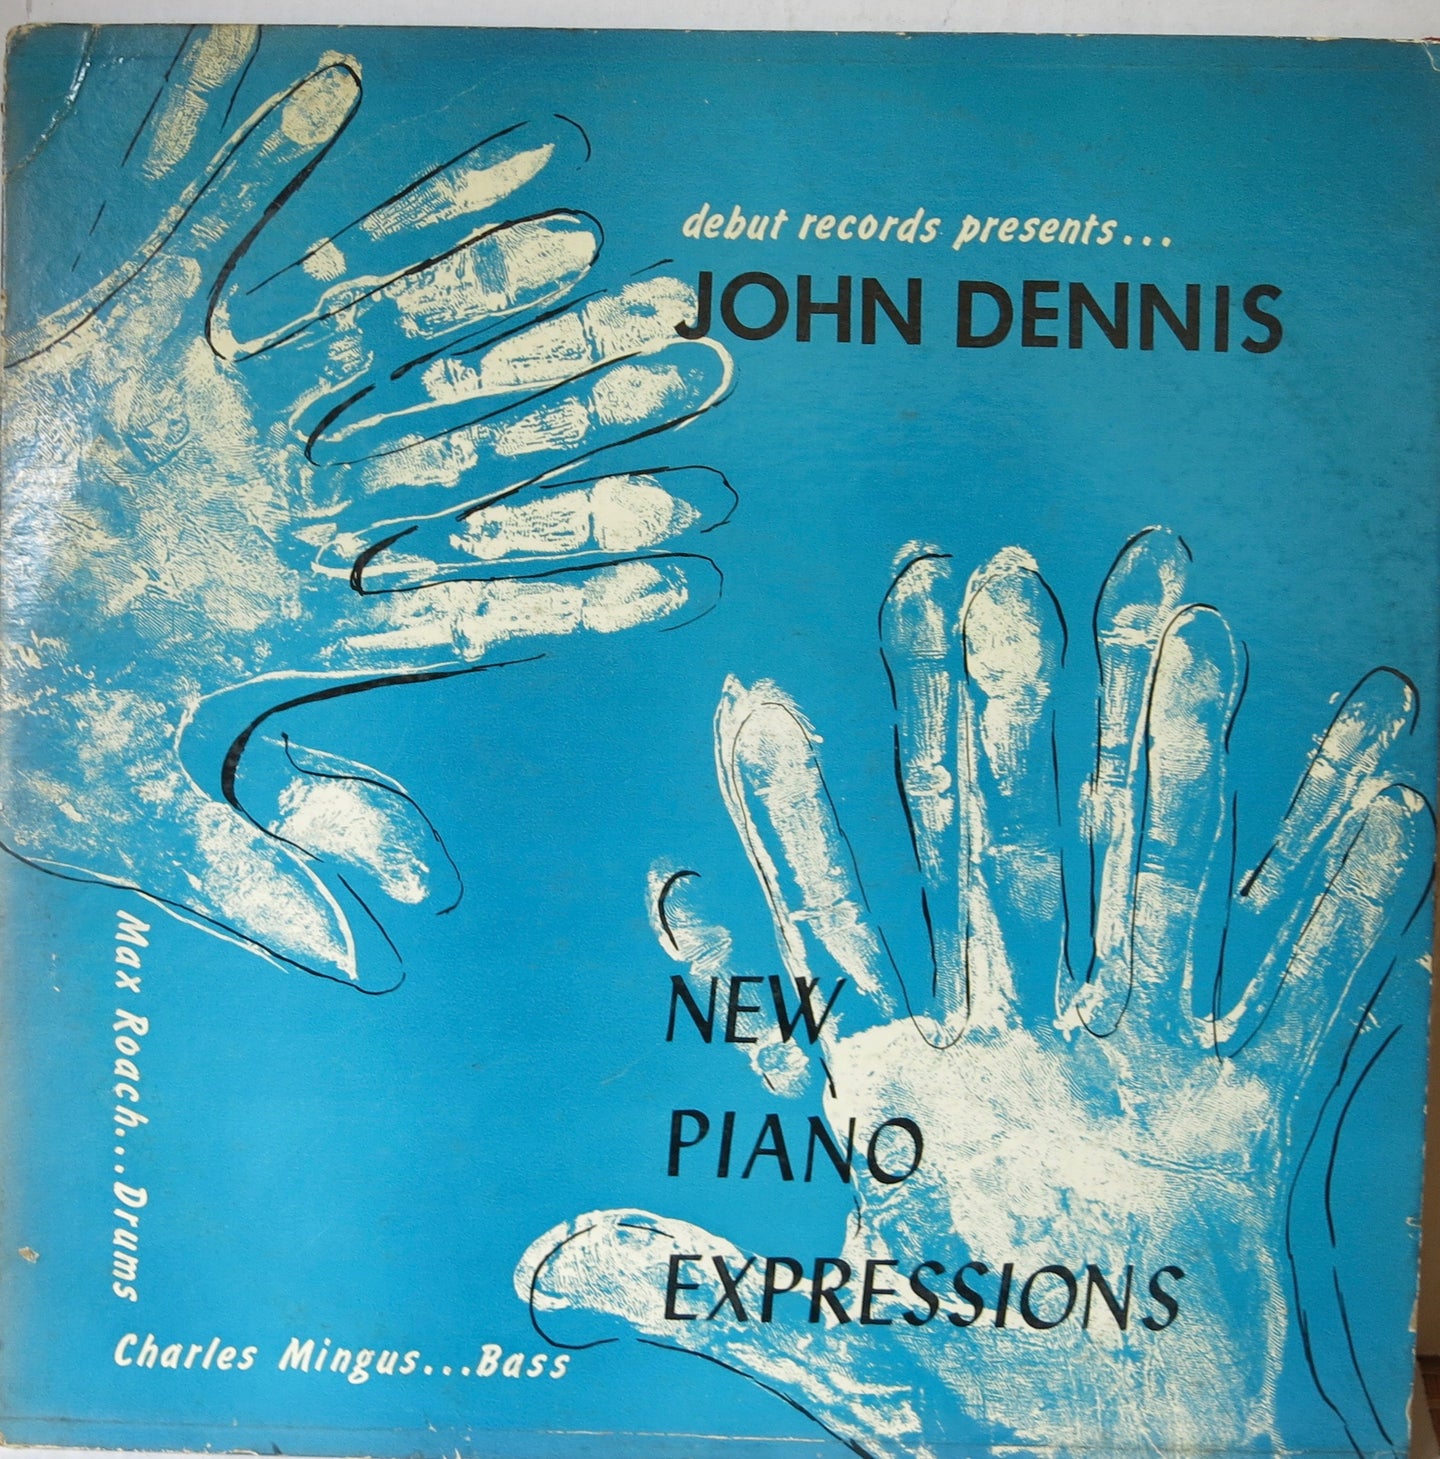 John Dennis ‎– New Piano Expressions - Debut